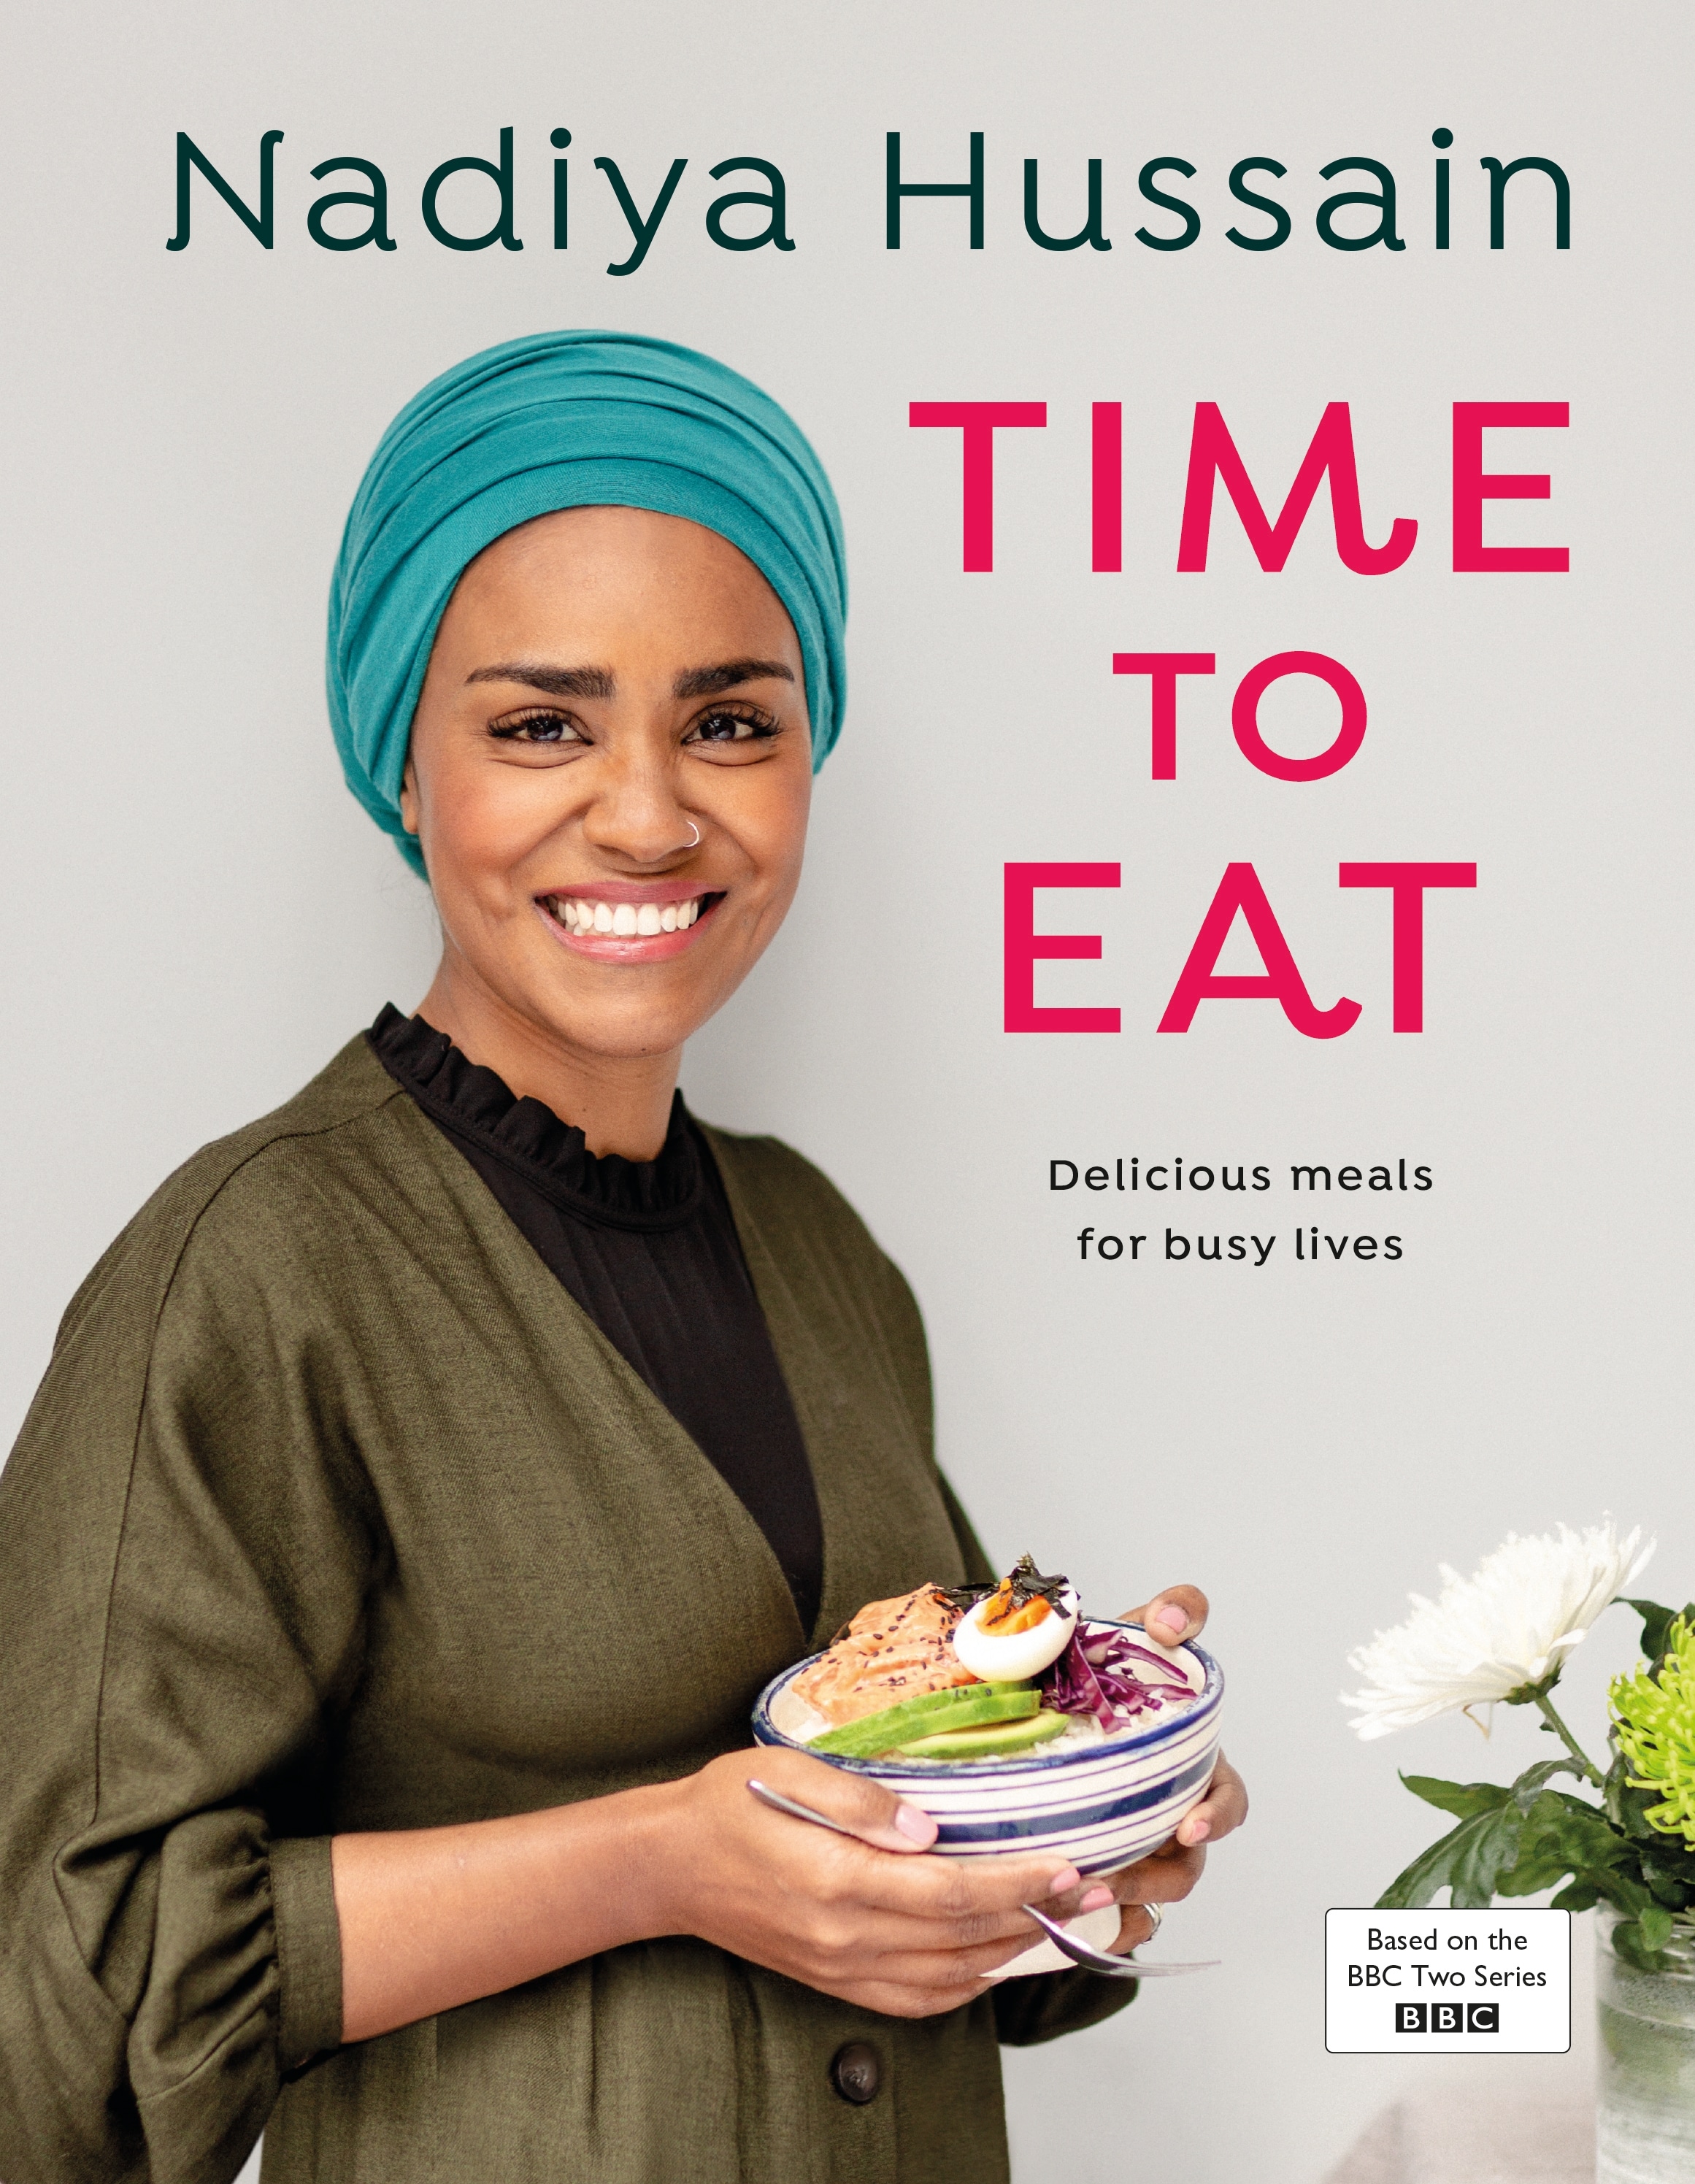 Book “Time to Eat” by Nadiya Hussain — July 11, 2019